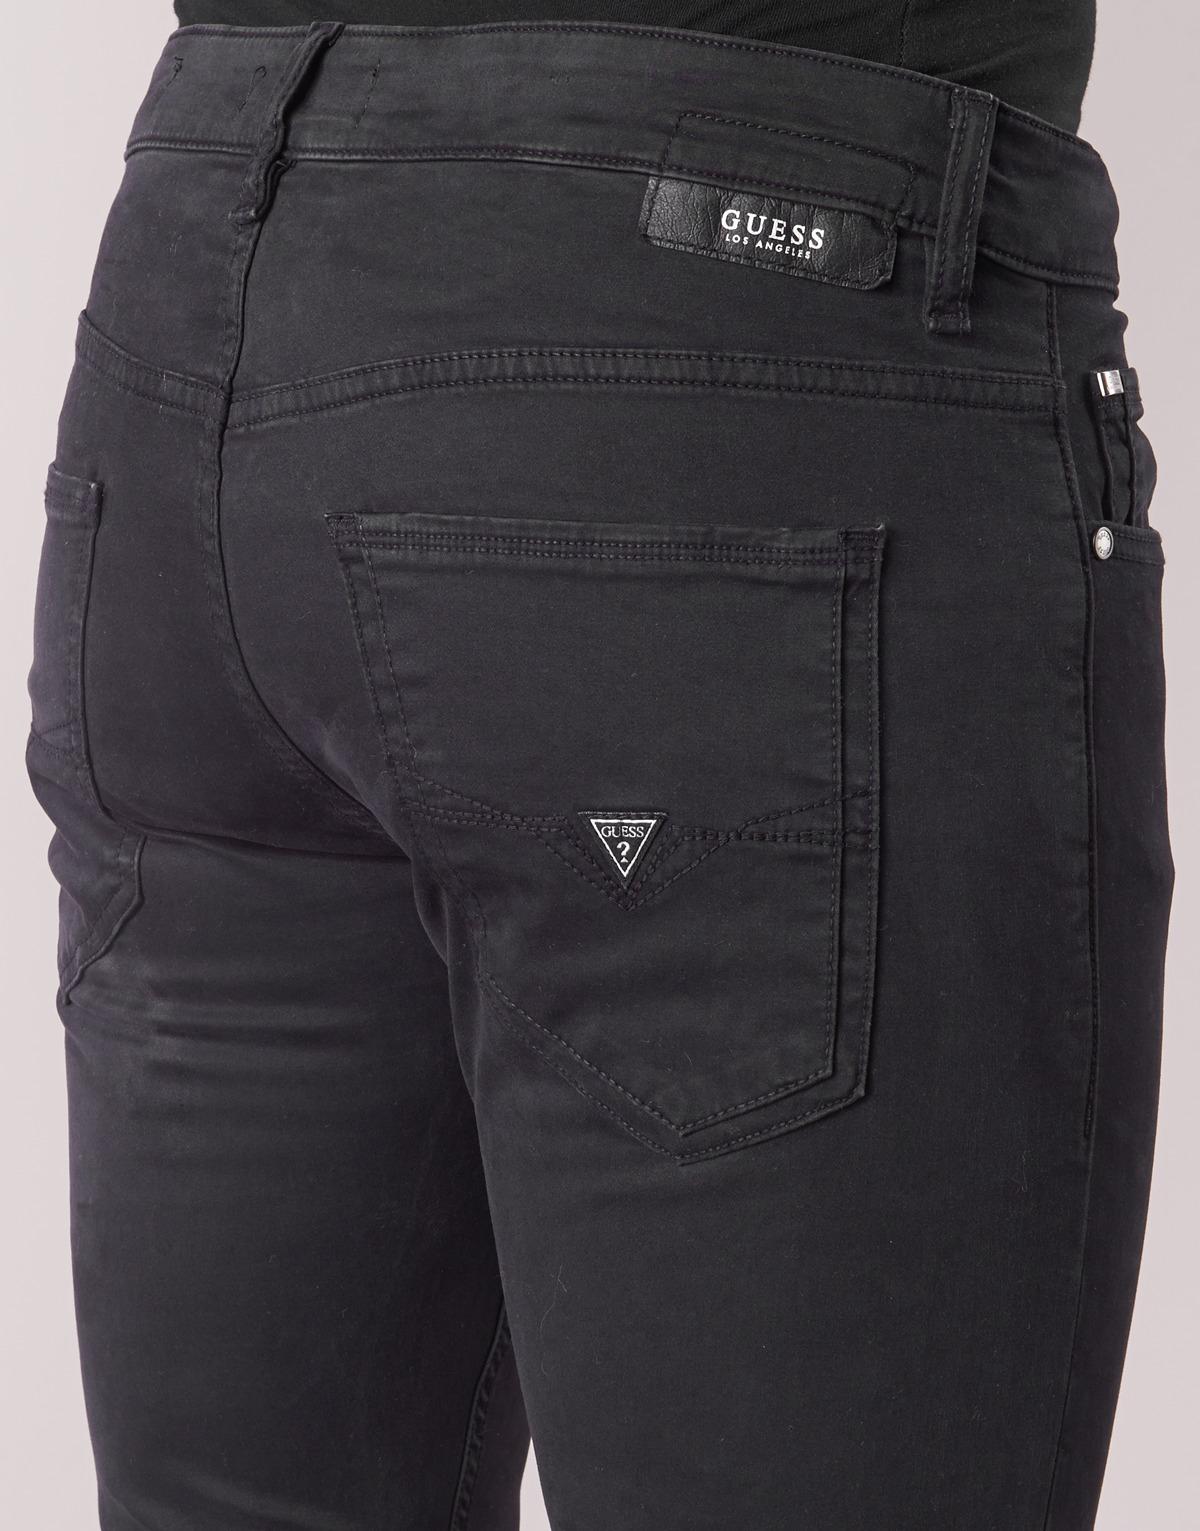 Guess Denim Miami Skinny Jeans in Black for Men - Lyst